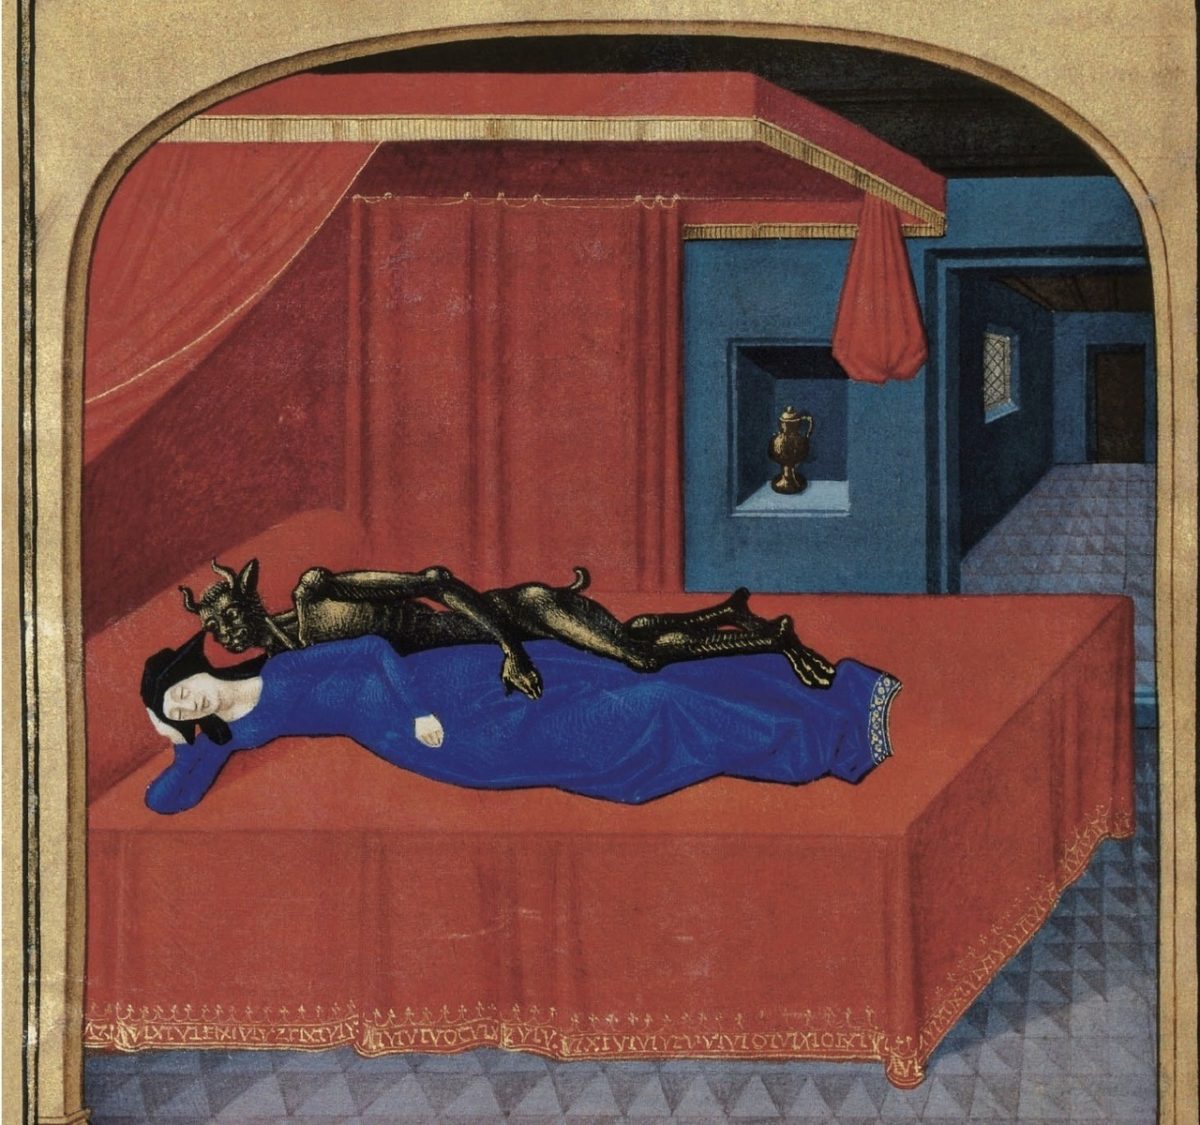 Histoire de Merlin, France (Poitiers), 1450-1455. BNF, Français 96, fol. 62v